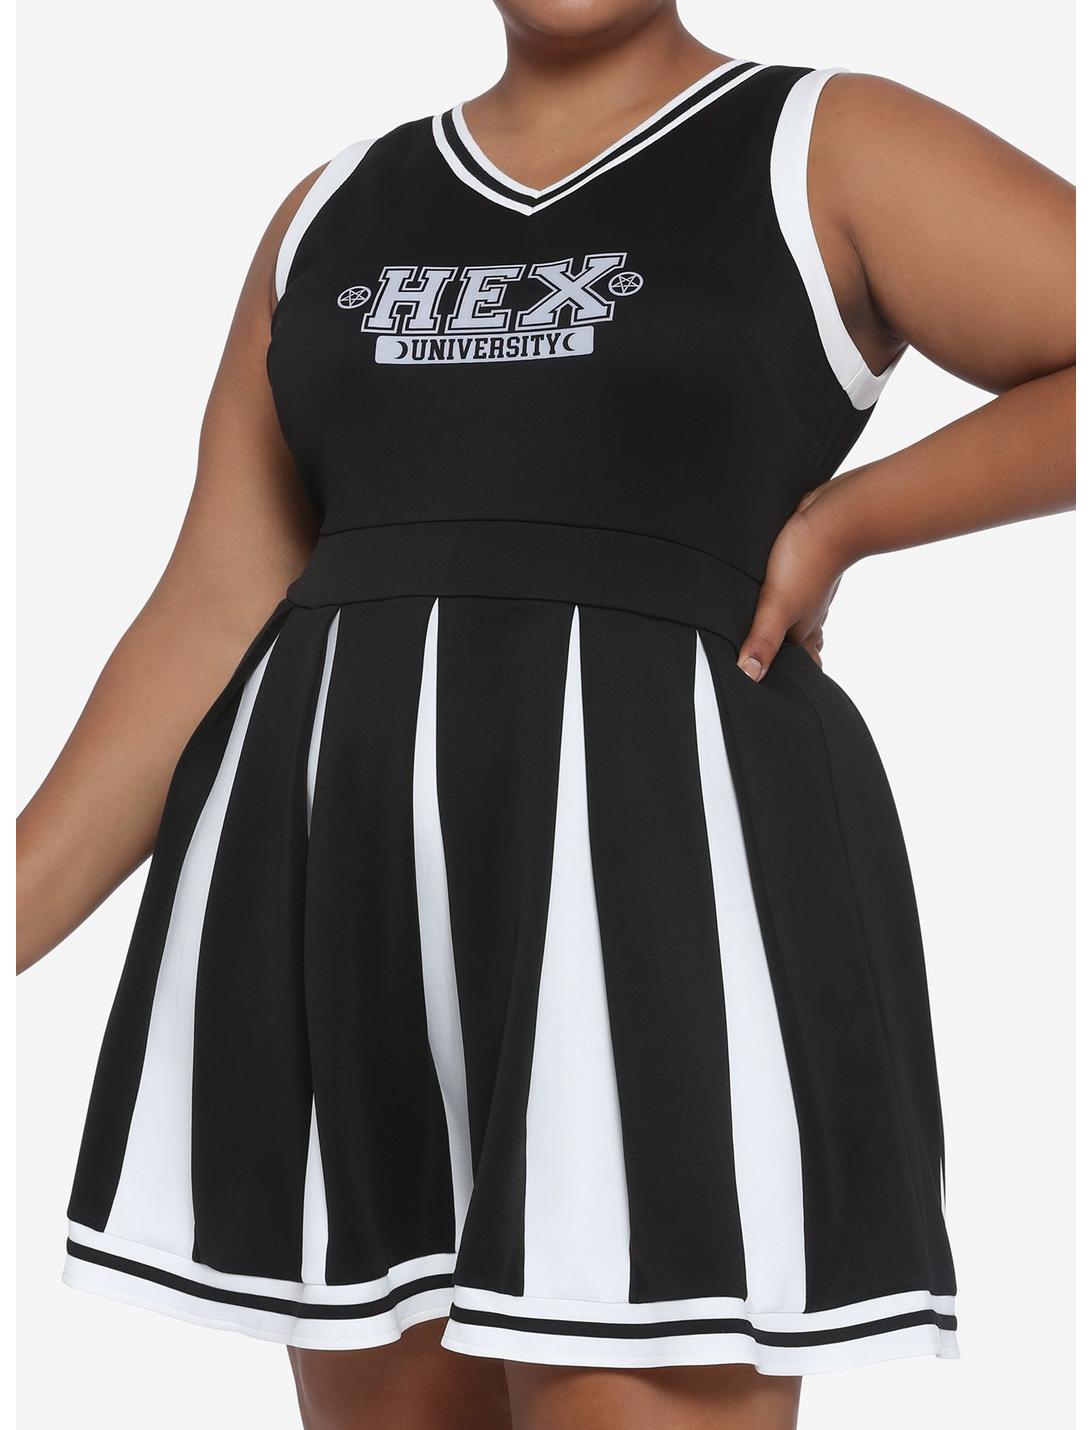 Black & White Hex University Cheer Dress Plus Size, WHITE, hi-res